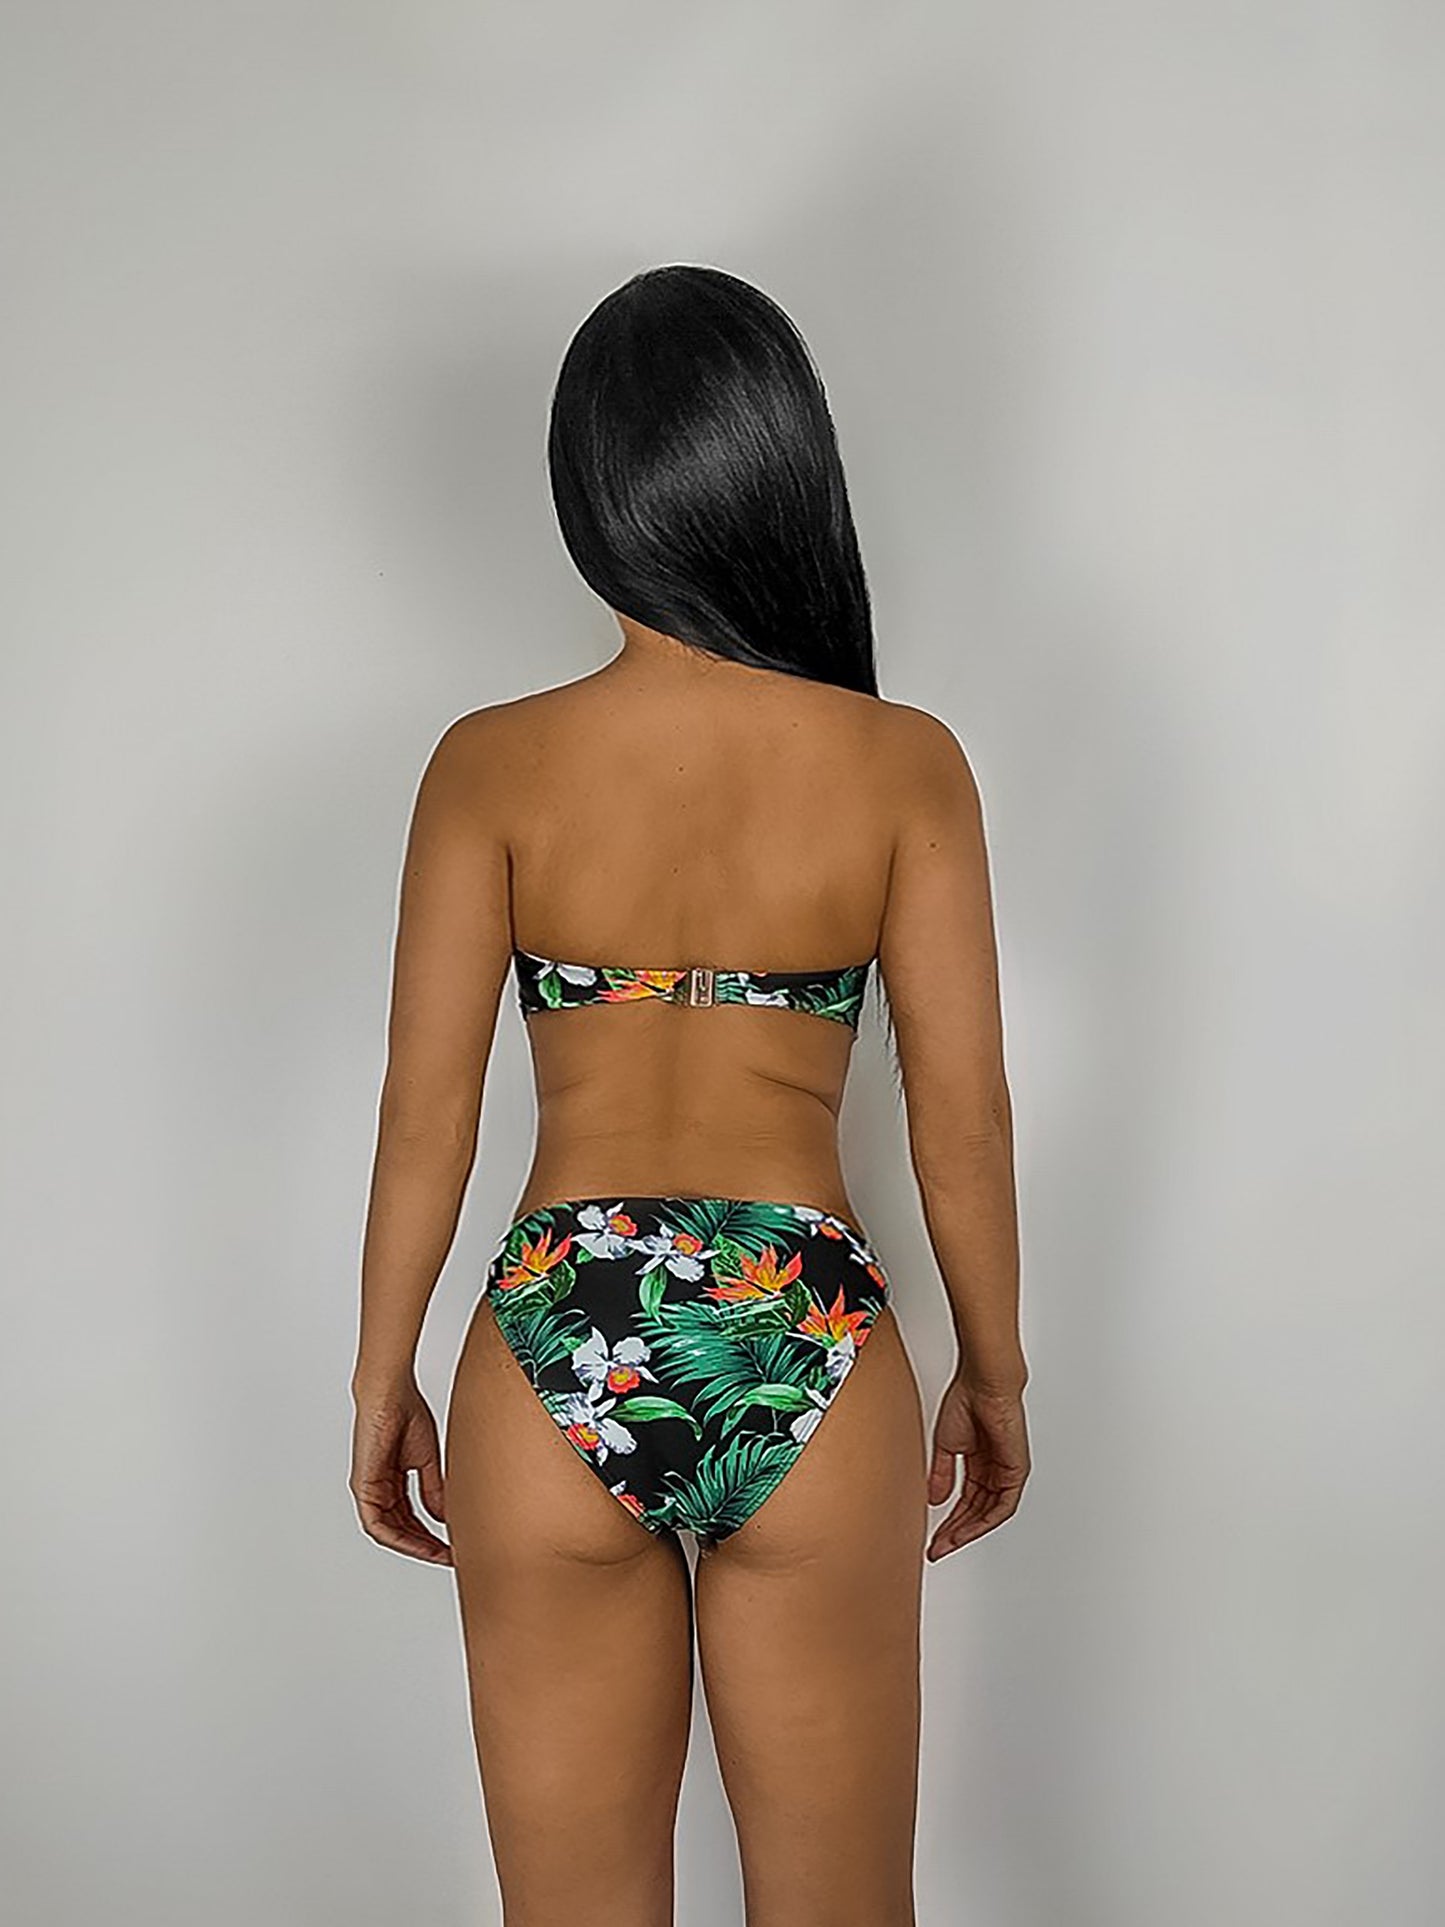 Bandeau Twist Tropical Flower Bikini Set